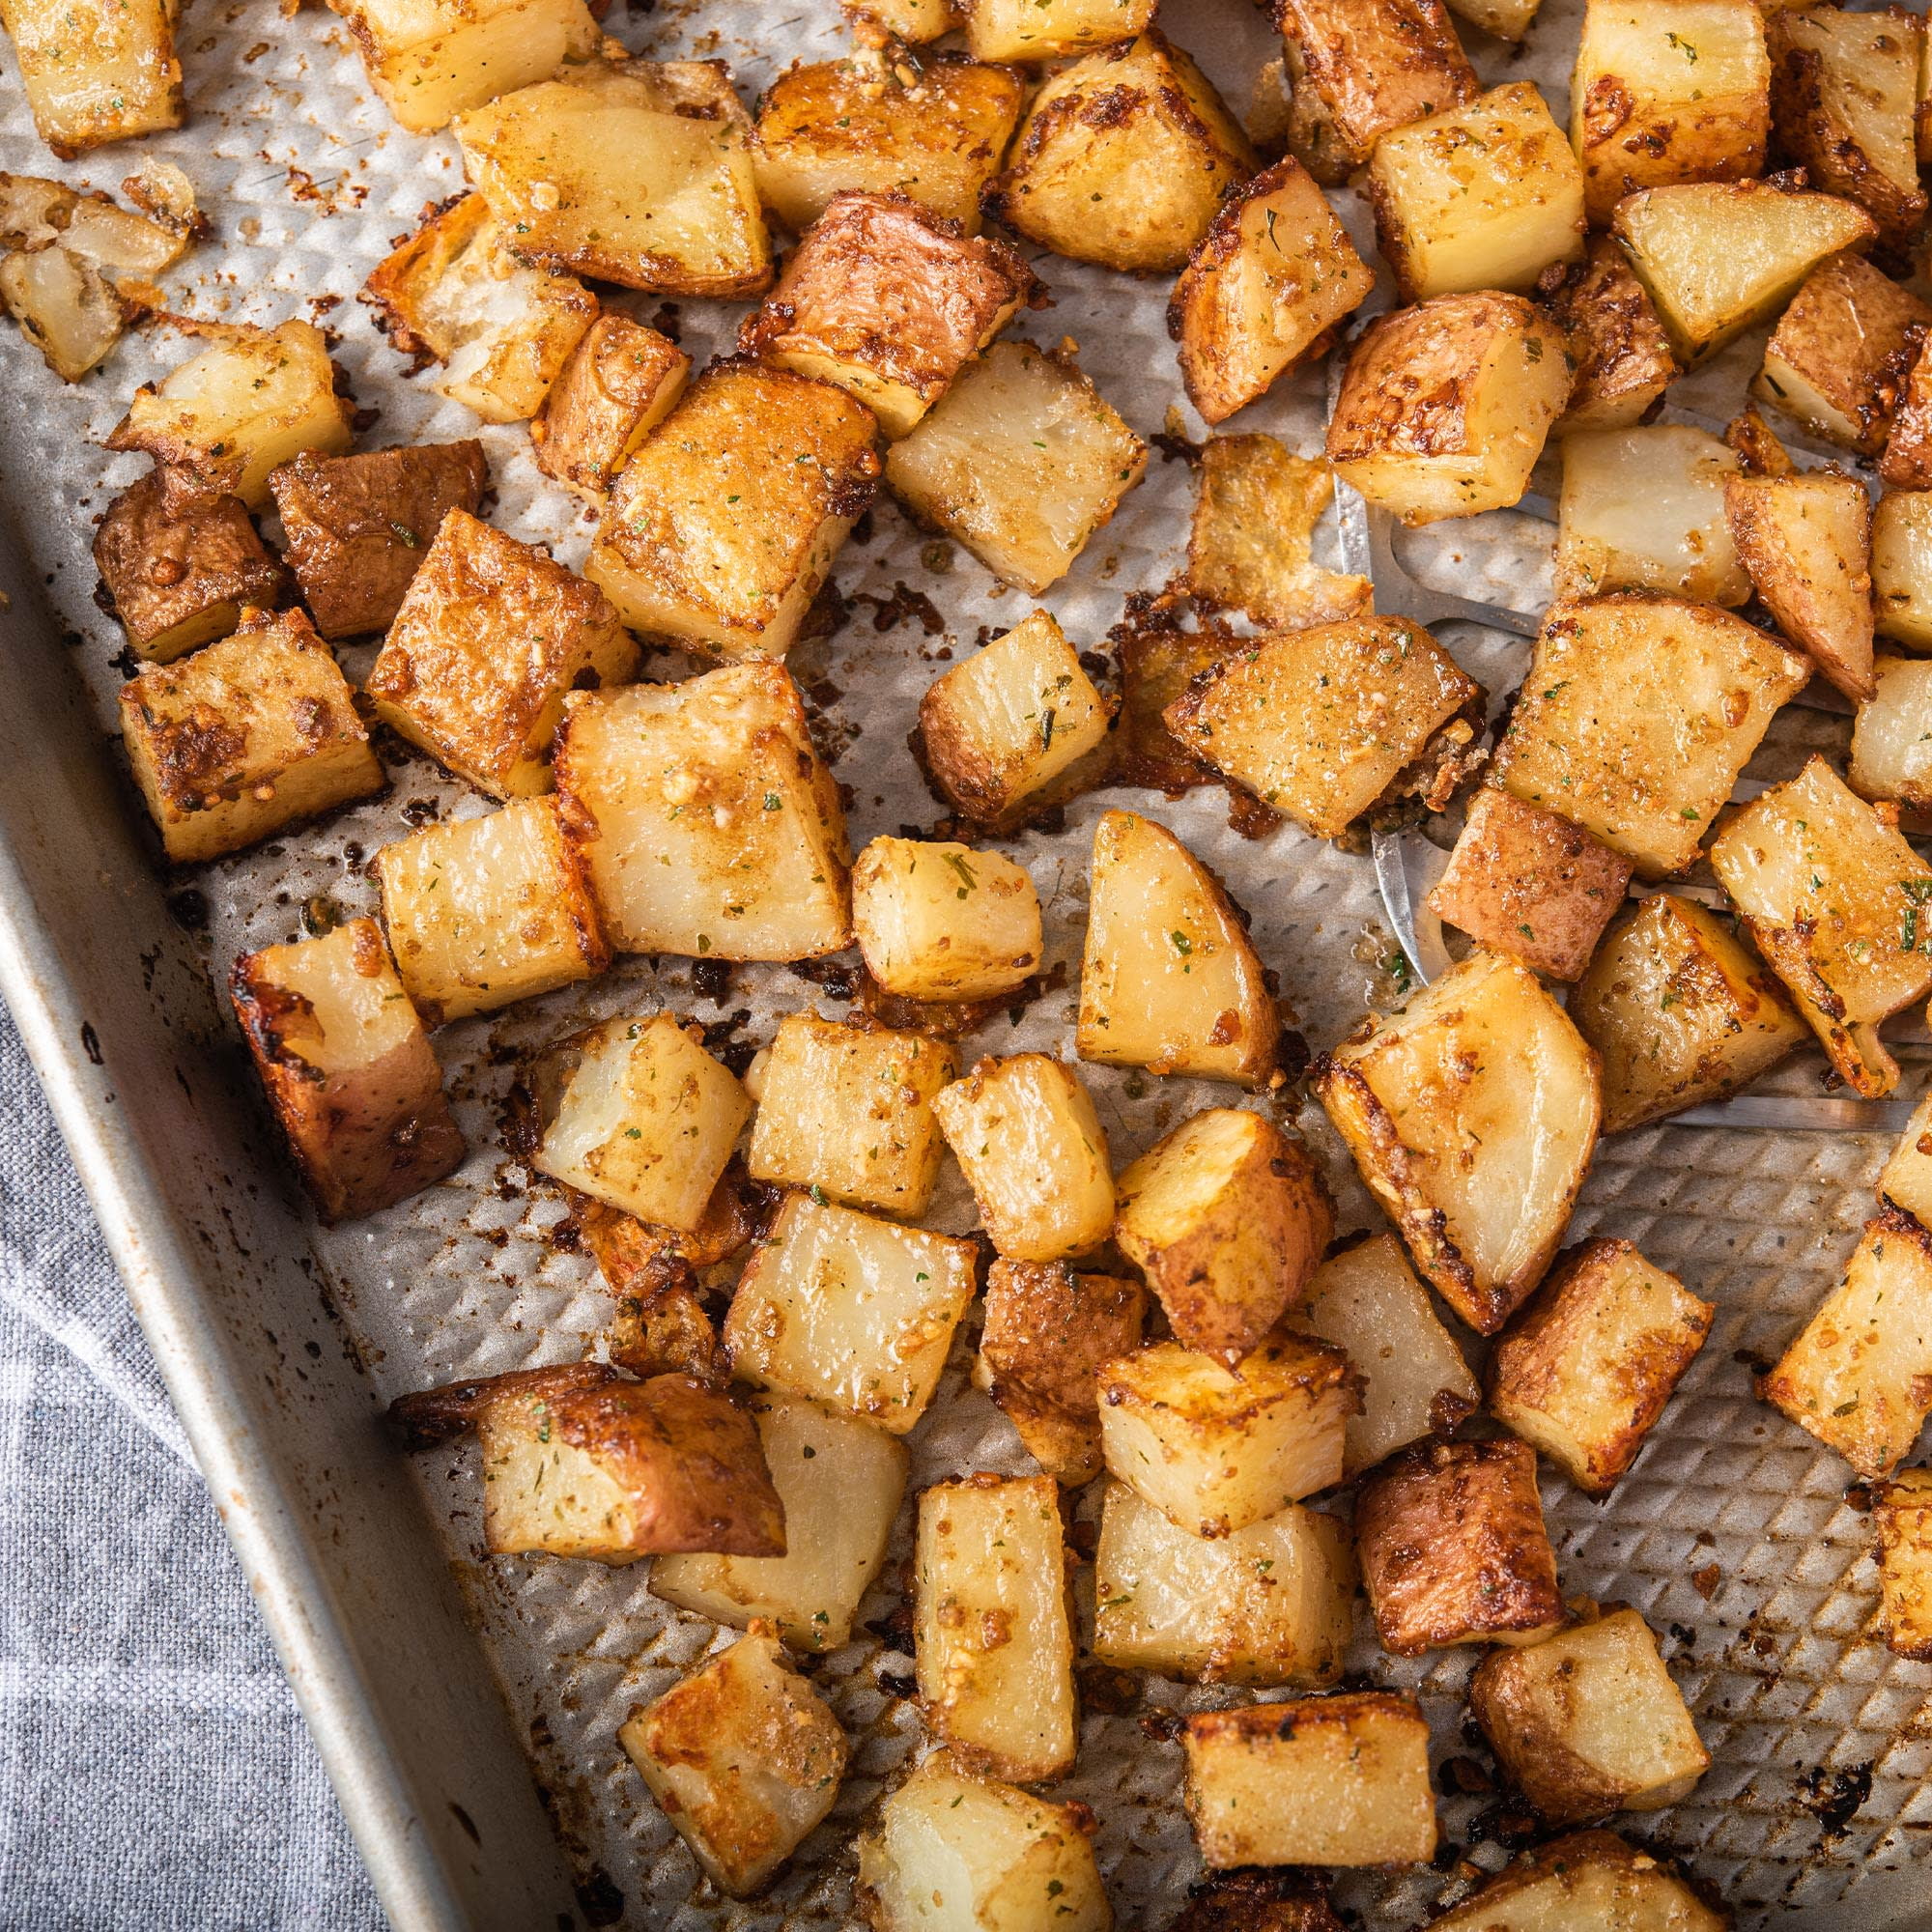 McCormick Toasted Onion & Garlic Potato Seasoning - Shop Spice